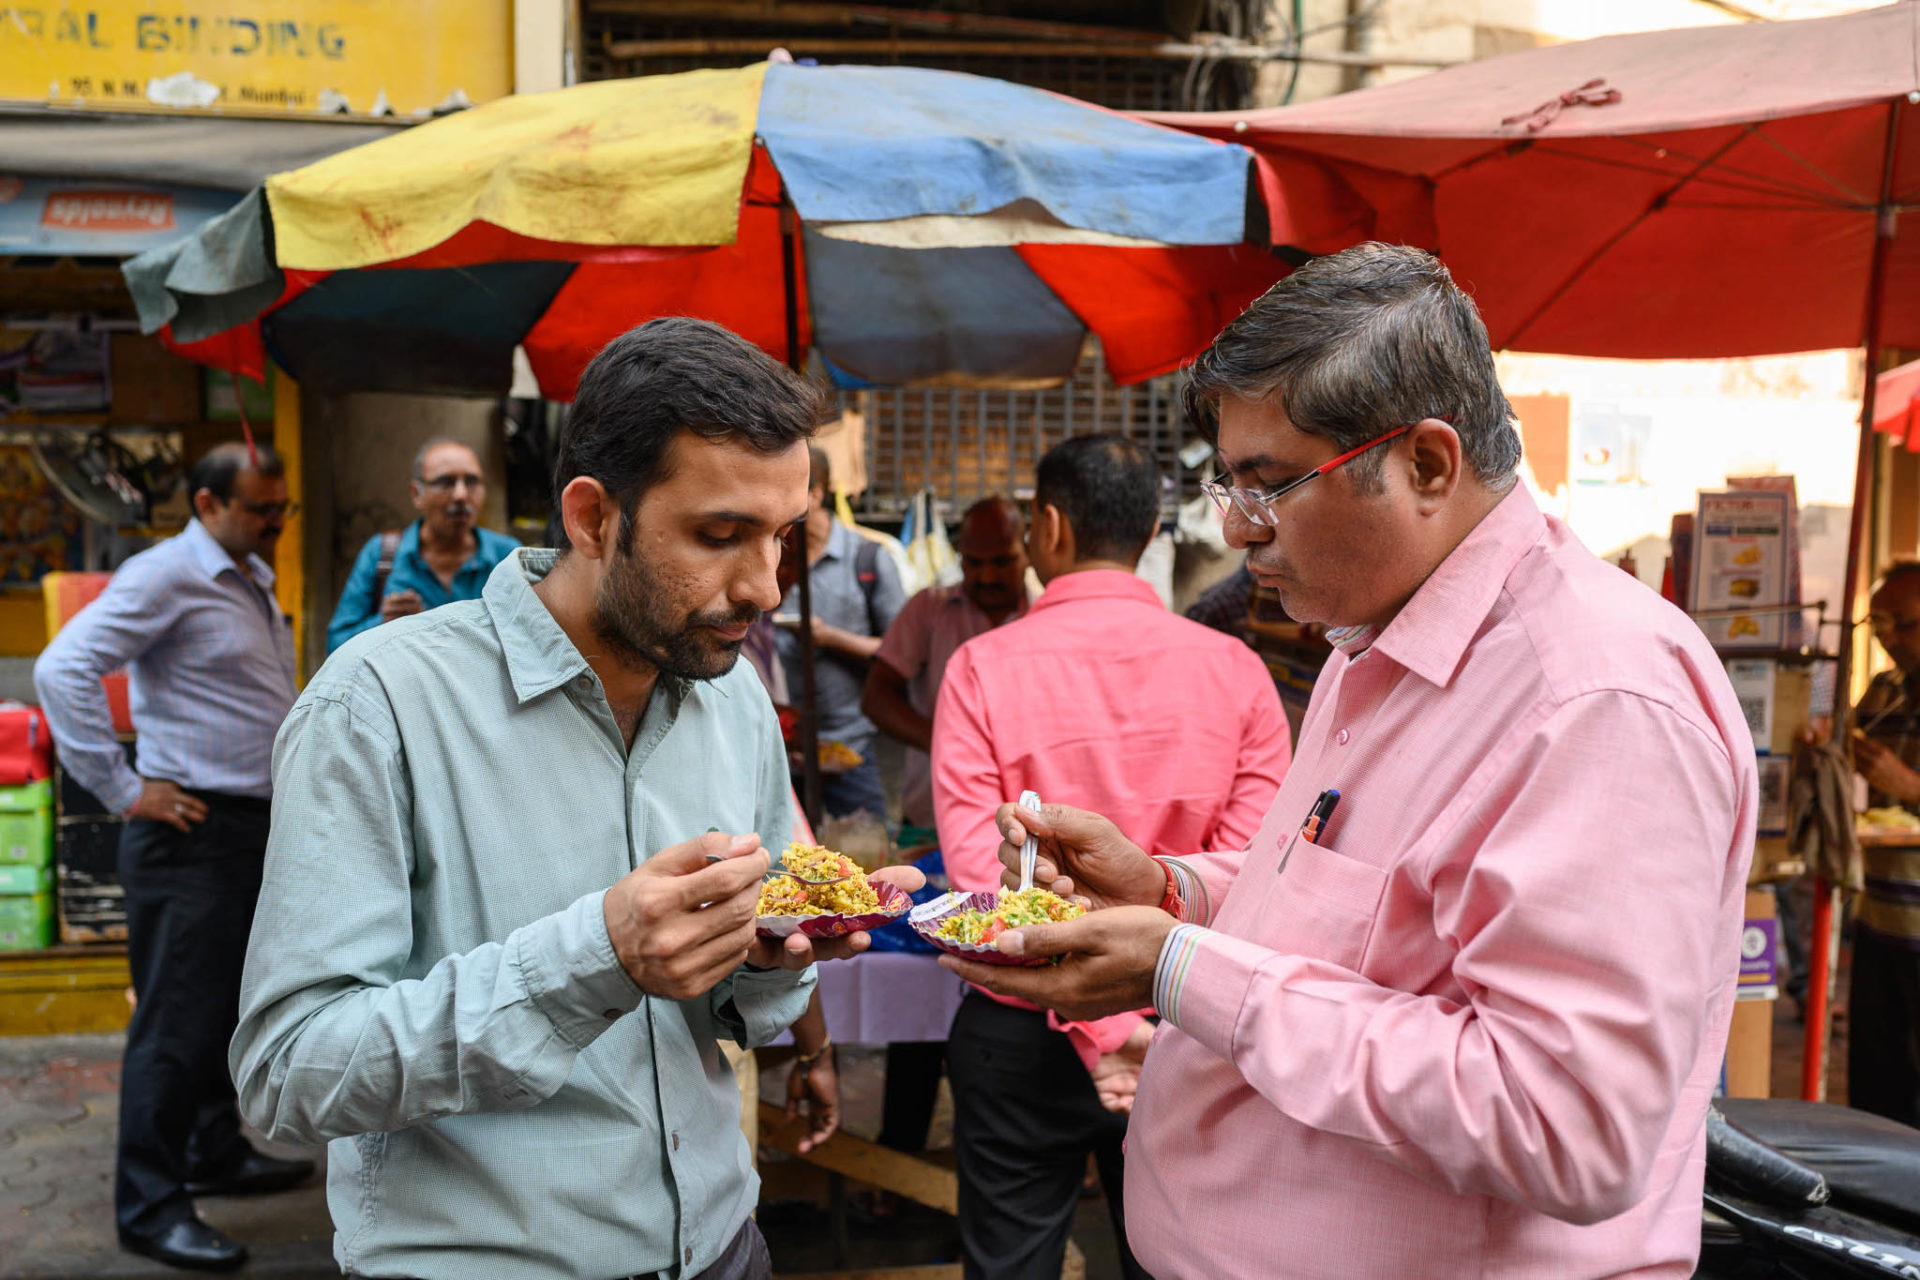 Bhel Puri and Sev Puri is a popular evening snack, Dalal street